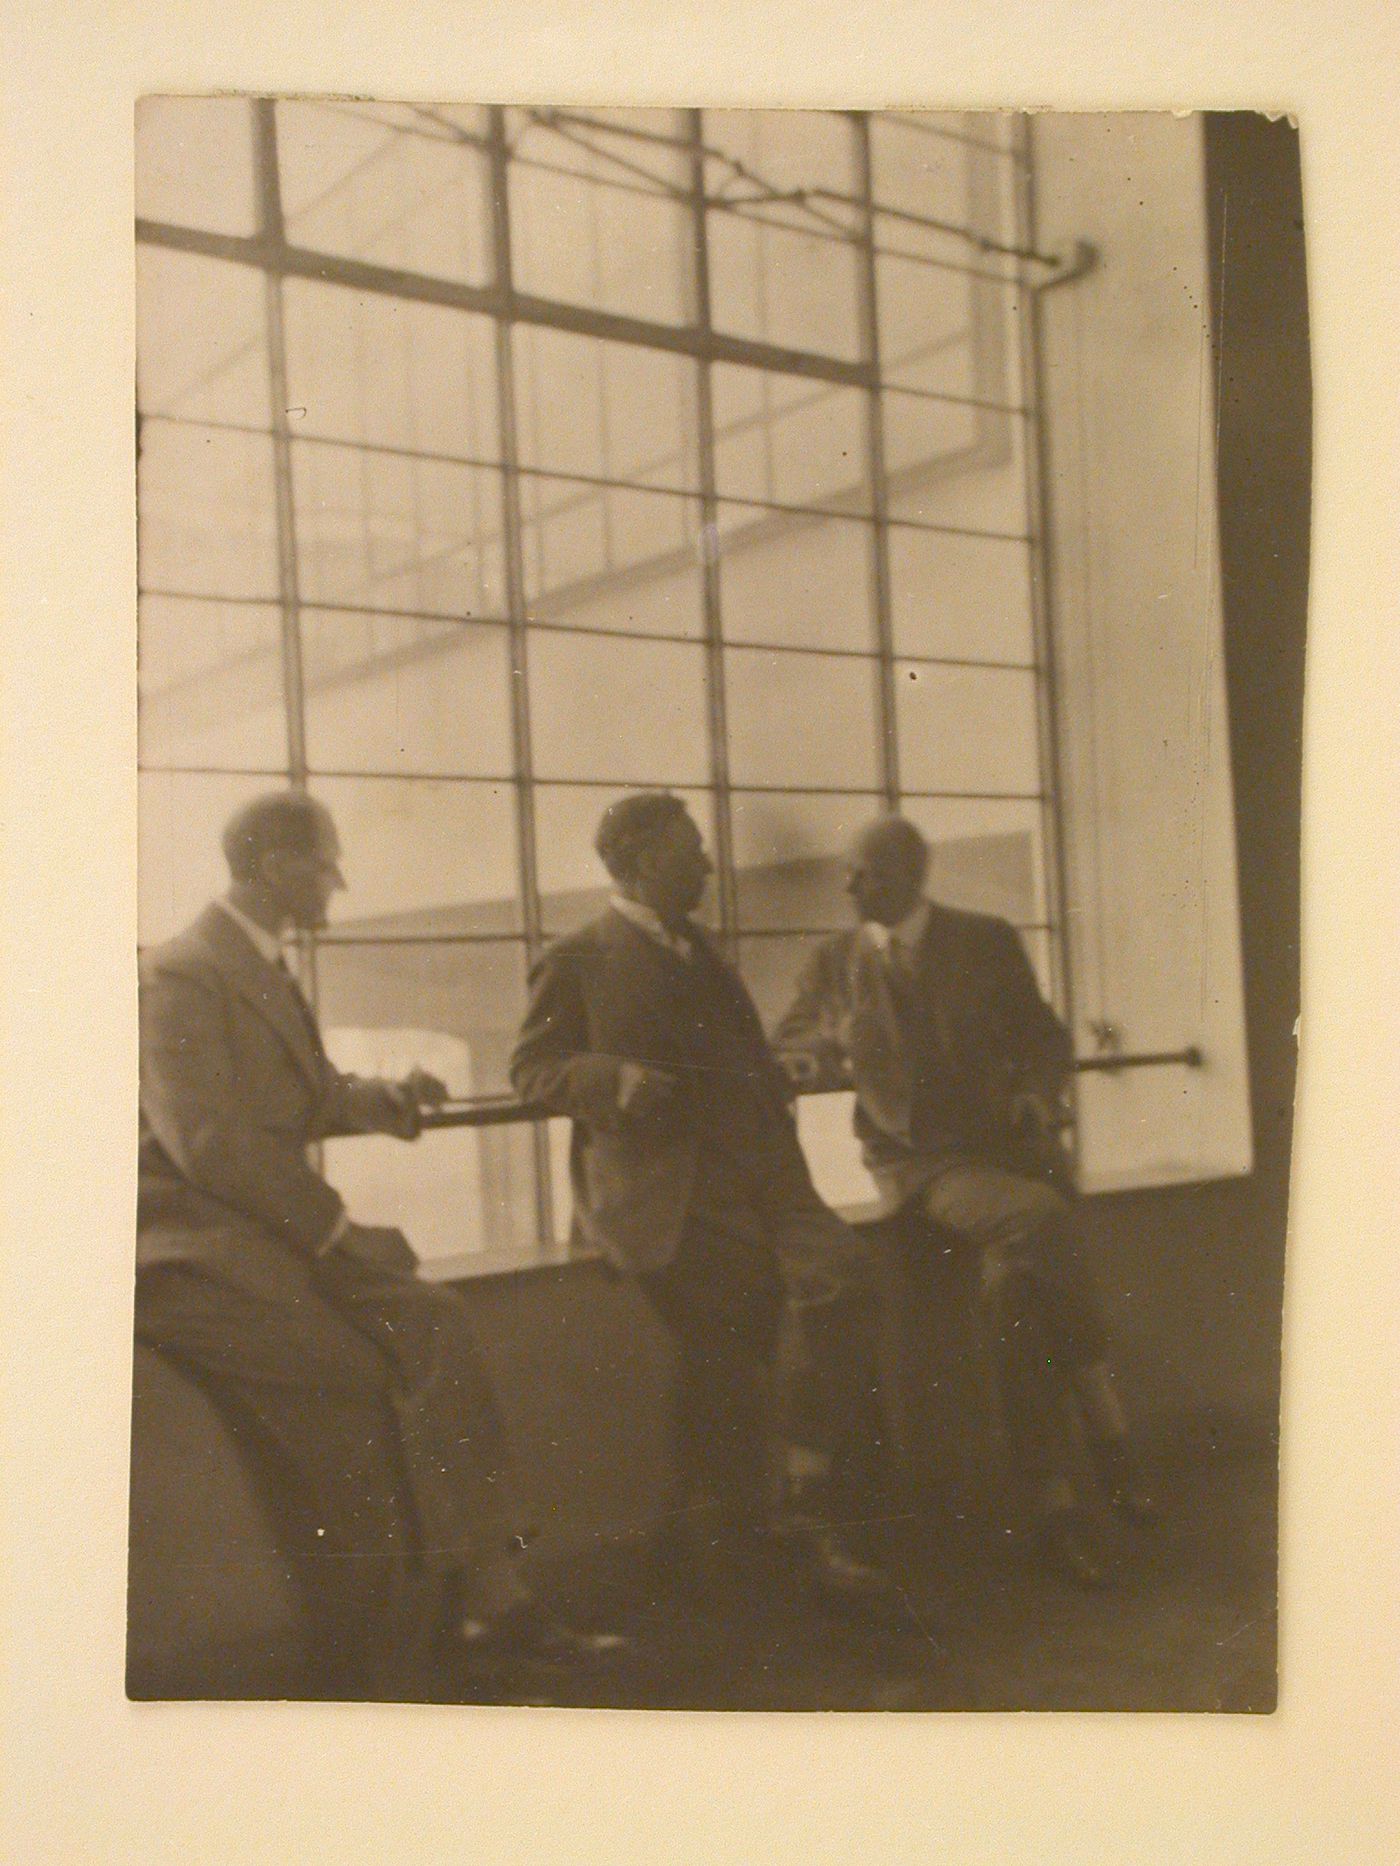 Portrait of Lyonel Feininger, Wassily Kandinsky and Oskar Schlemmer at the Bauhaus, Dessau, Germany